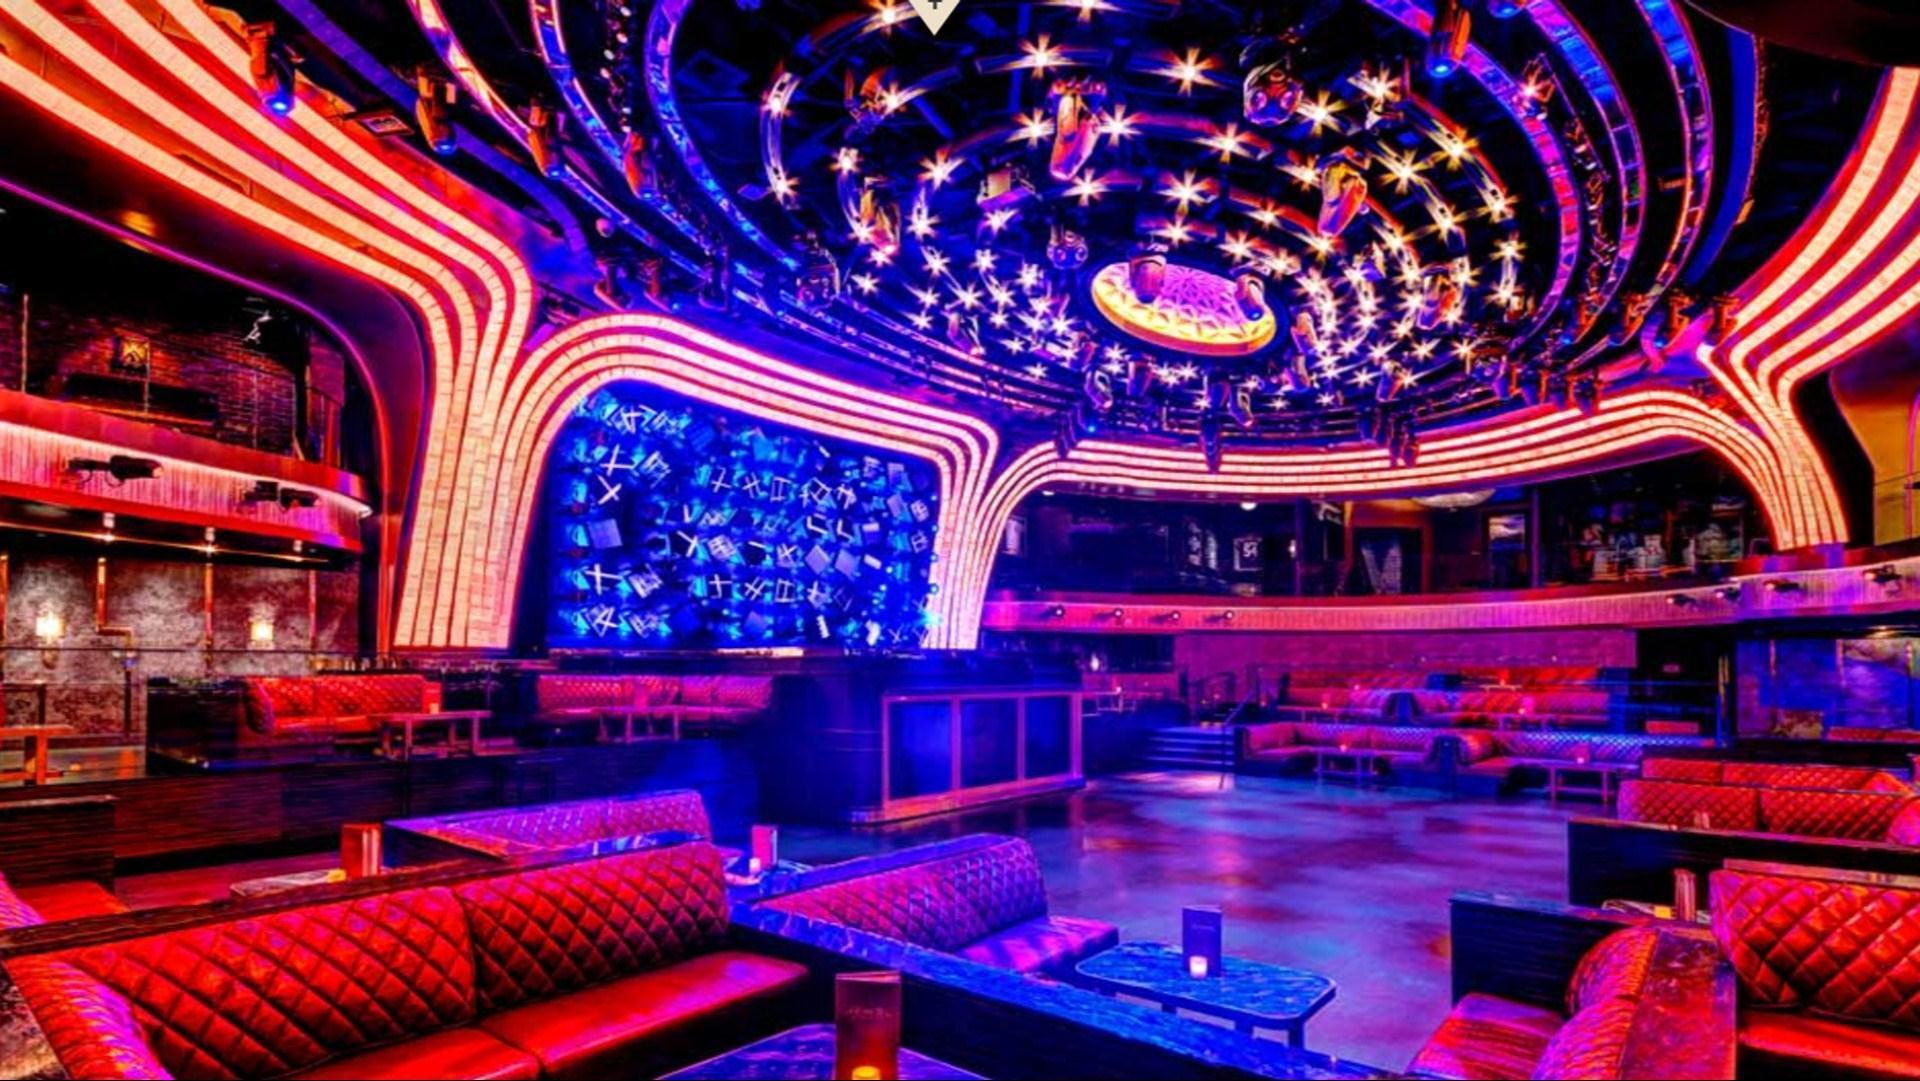 JEWEL Nightclub in Las Vegas, NV